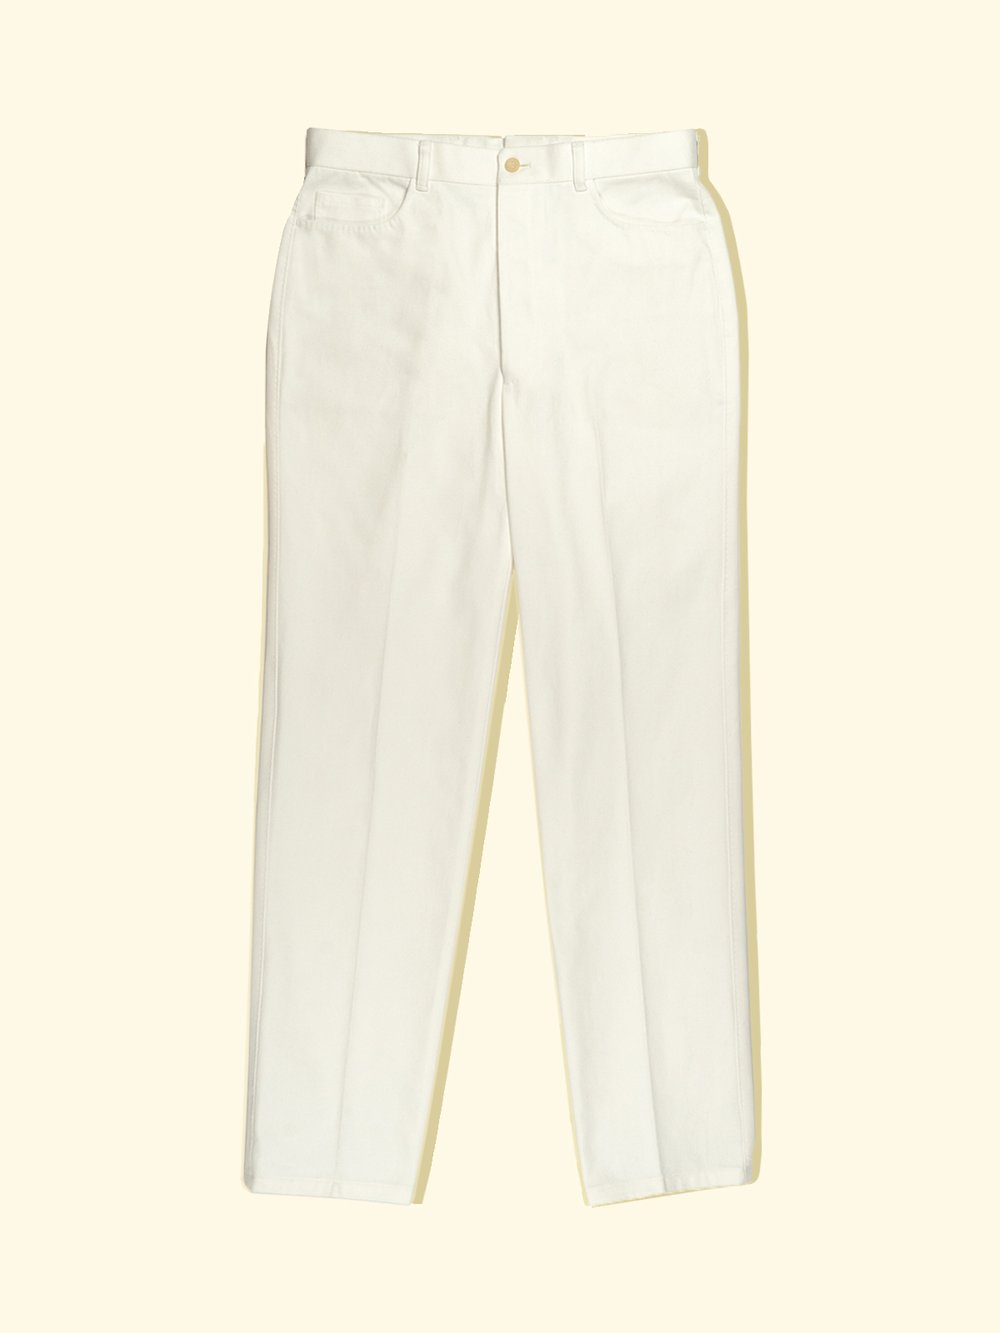 Civilman Trousers - White Denim